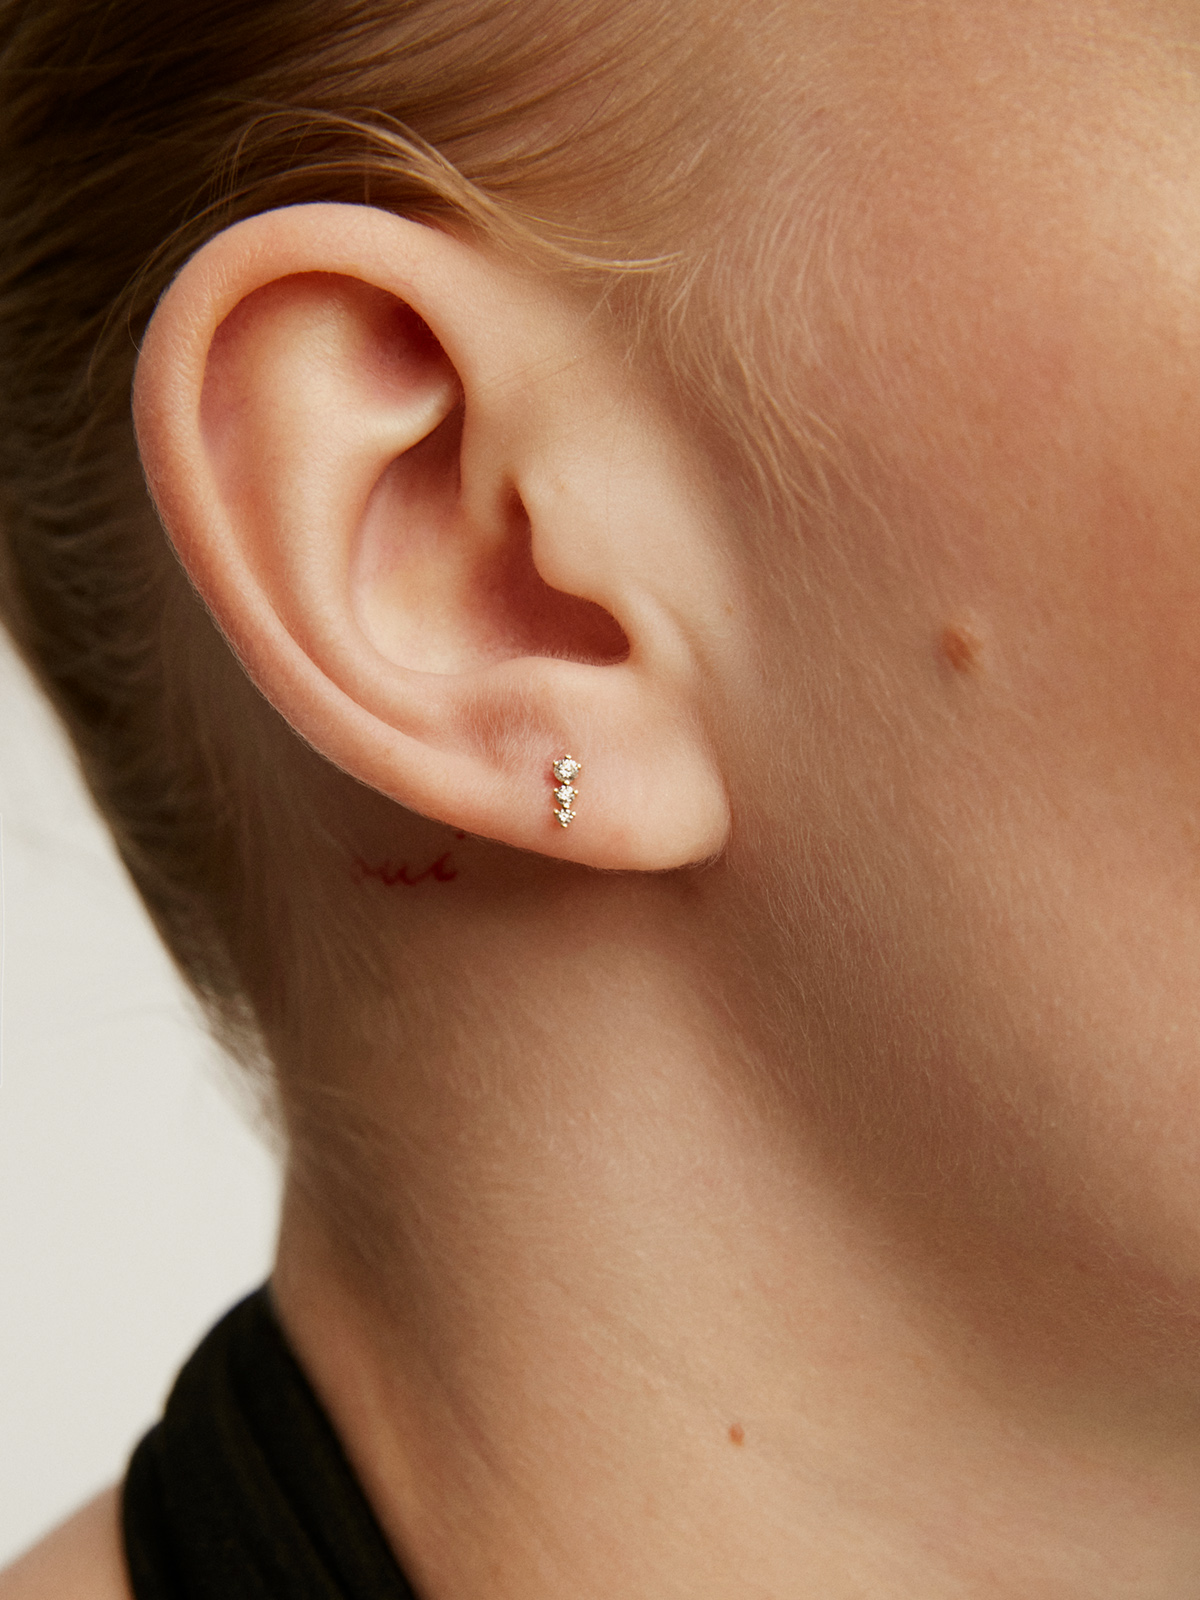 Single 18K yellow gold earring with triple diamond